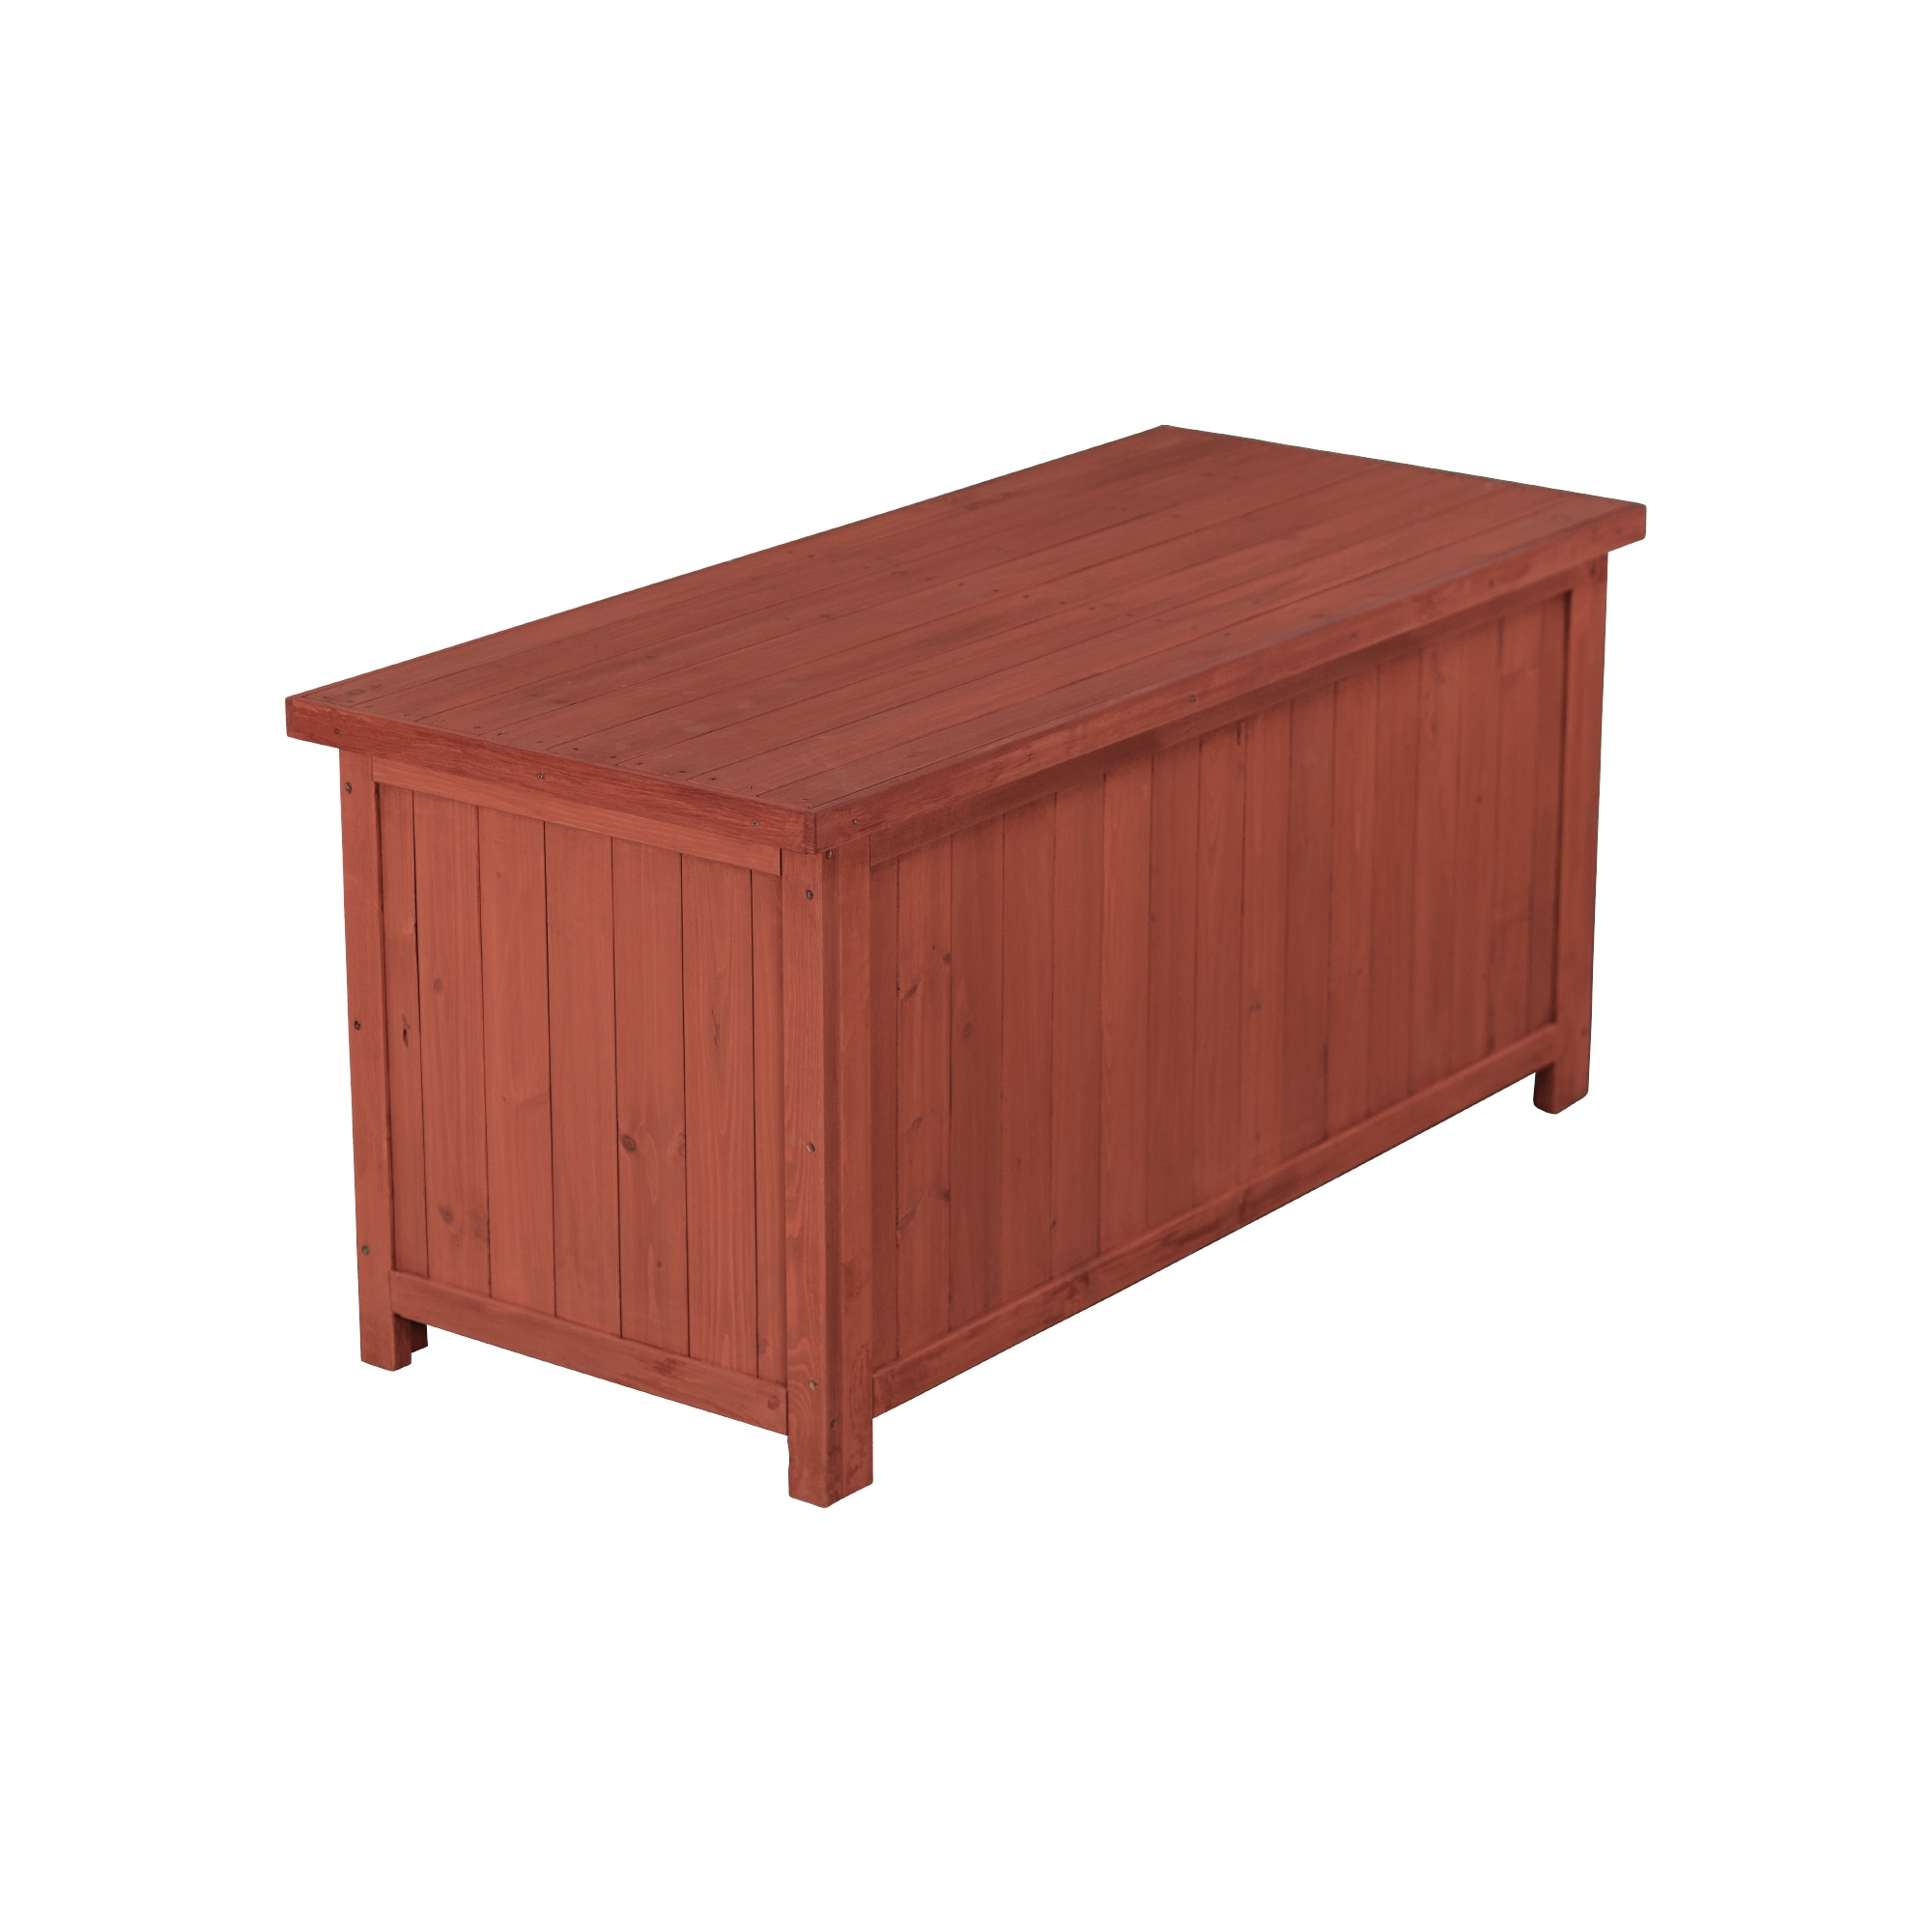 Leisure Season Deck Storage Box, Medium Brown